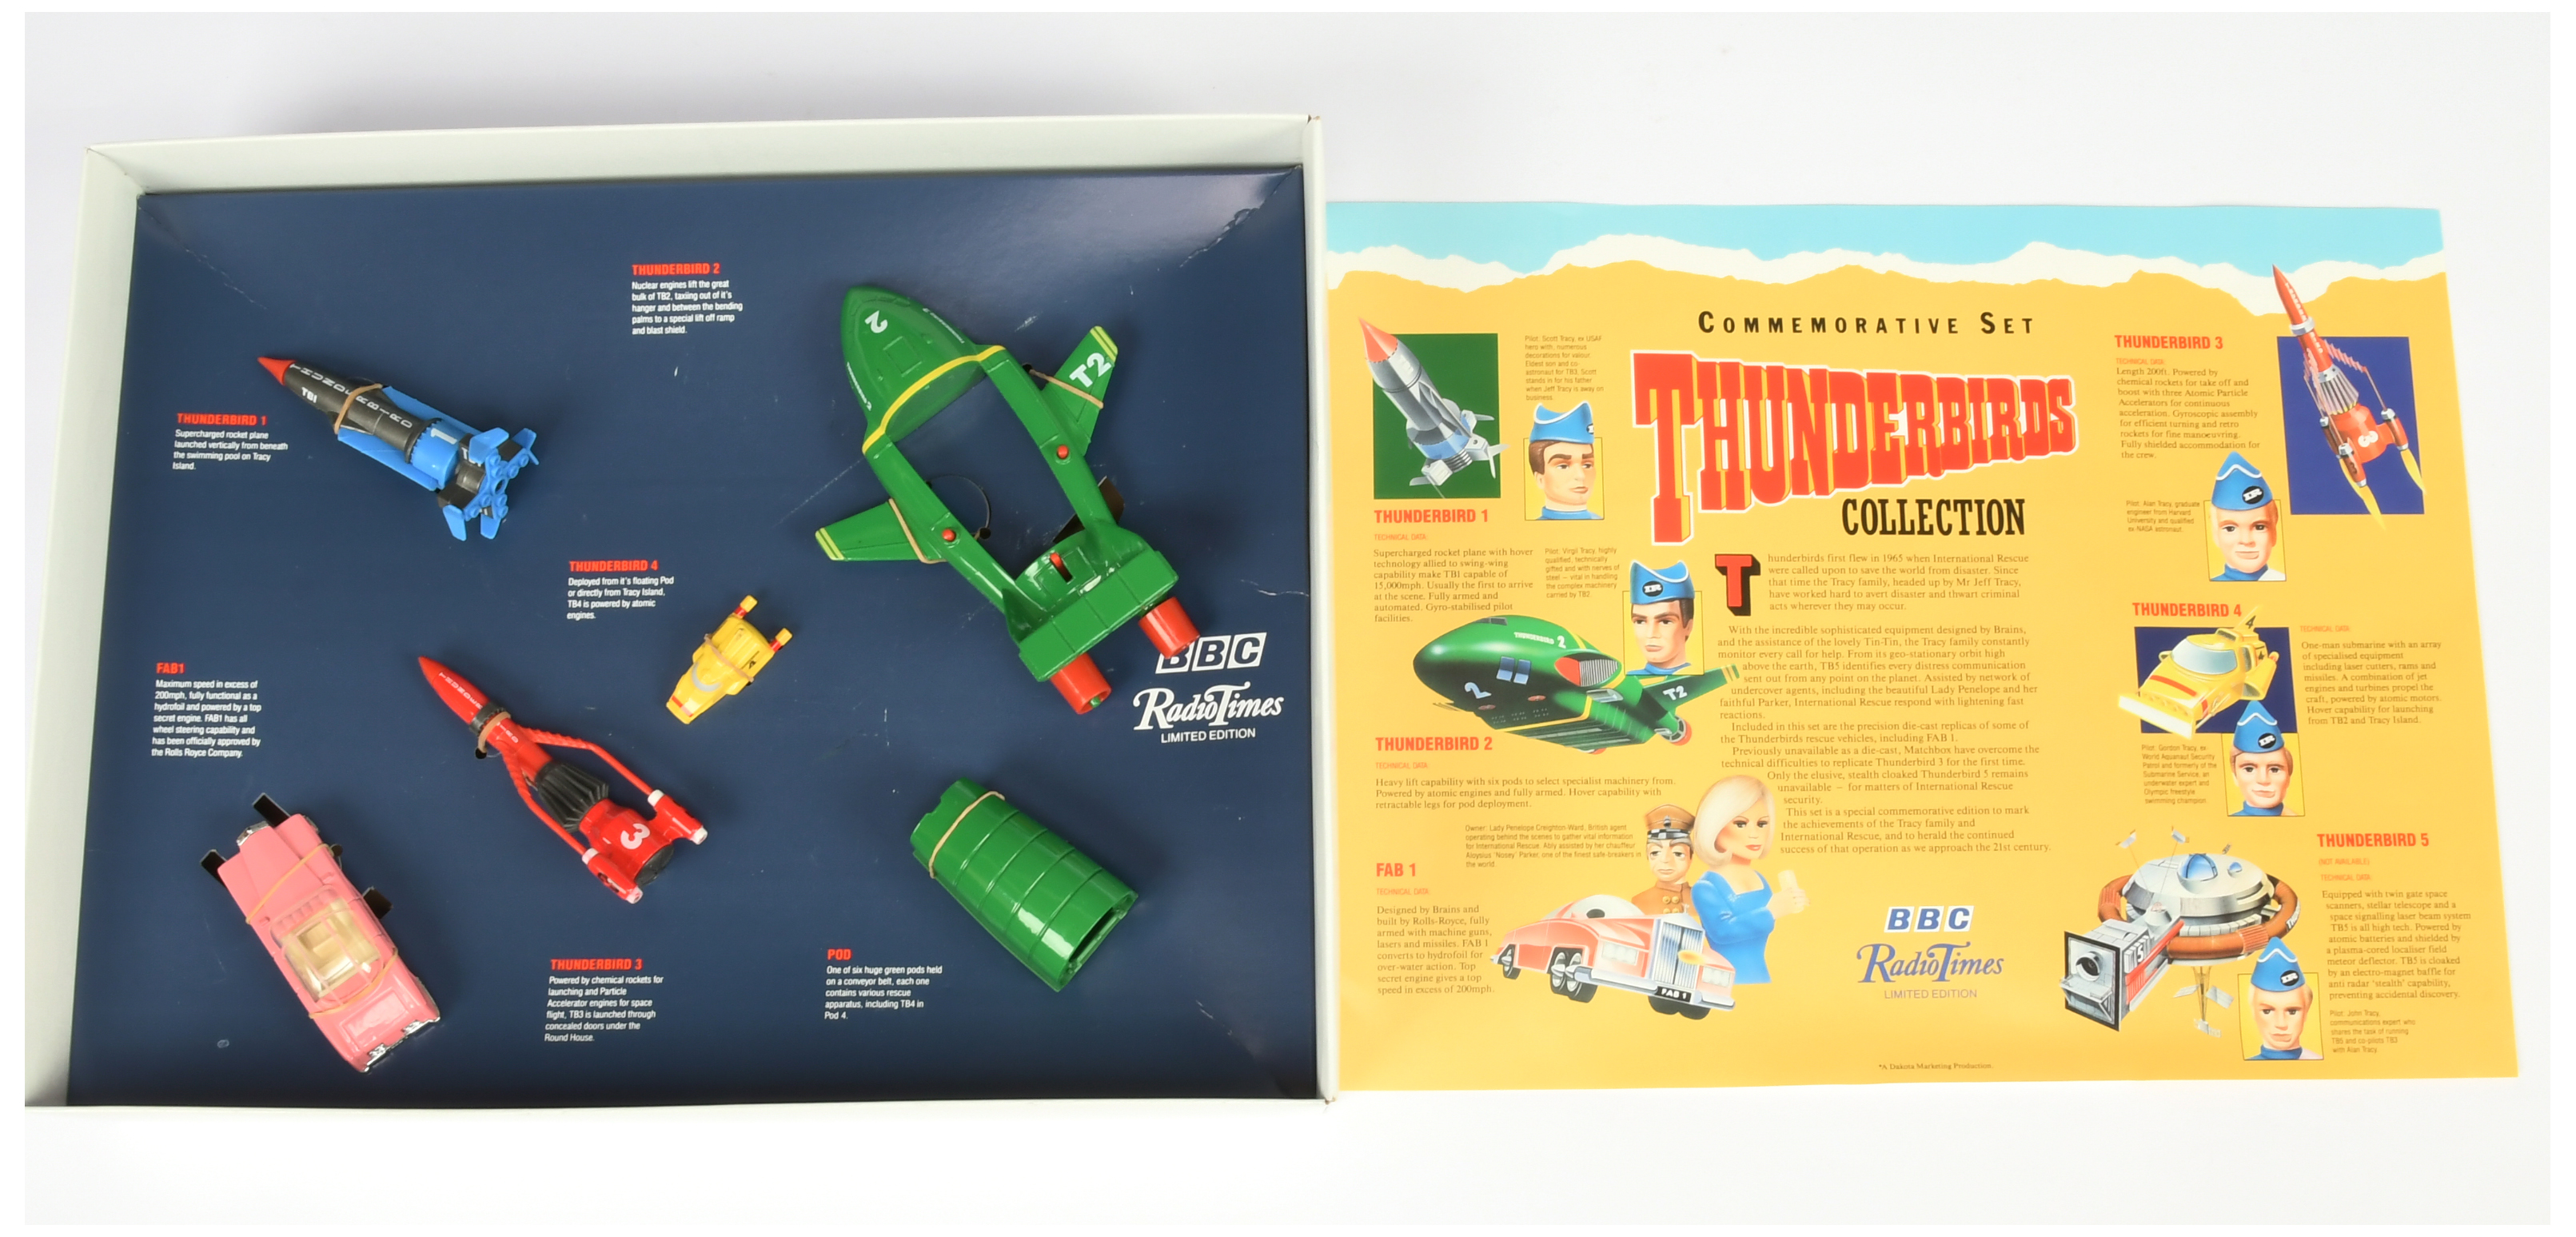 Matchbox "Thunderbirds" Commemorative Set produced for "BBC Radio Times" - Image 2 of 2